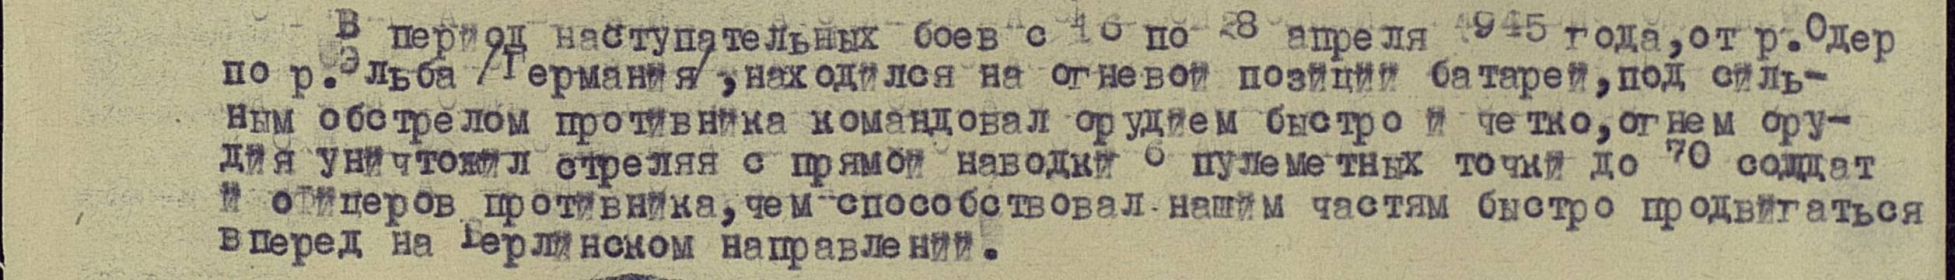 other-soldiers-files/orden_meshcheryakova.jpg